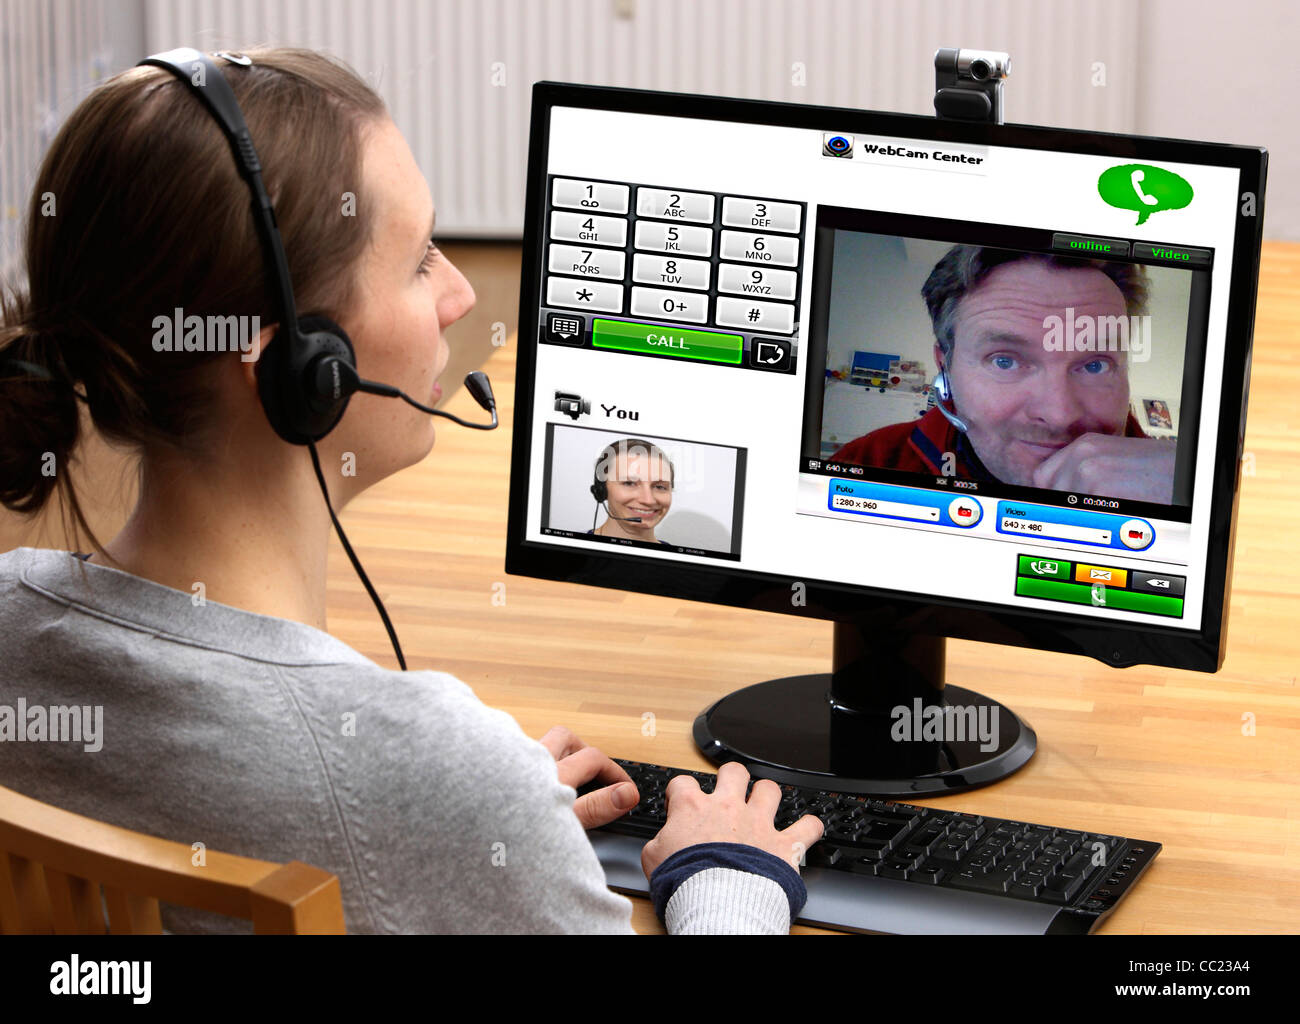 Online web cam chat